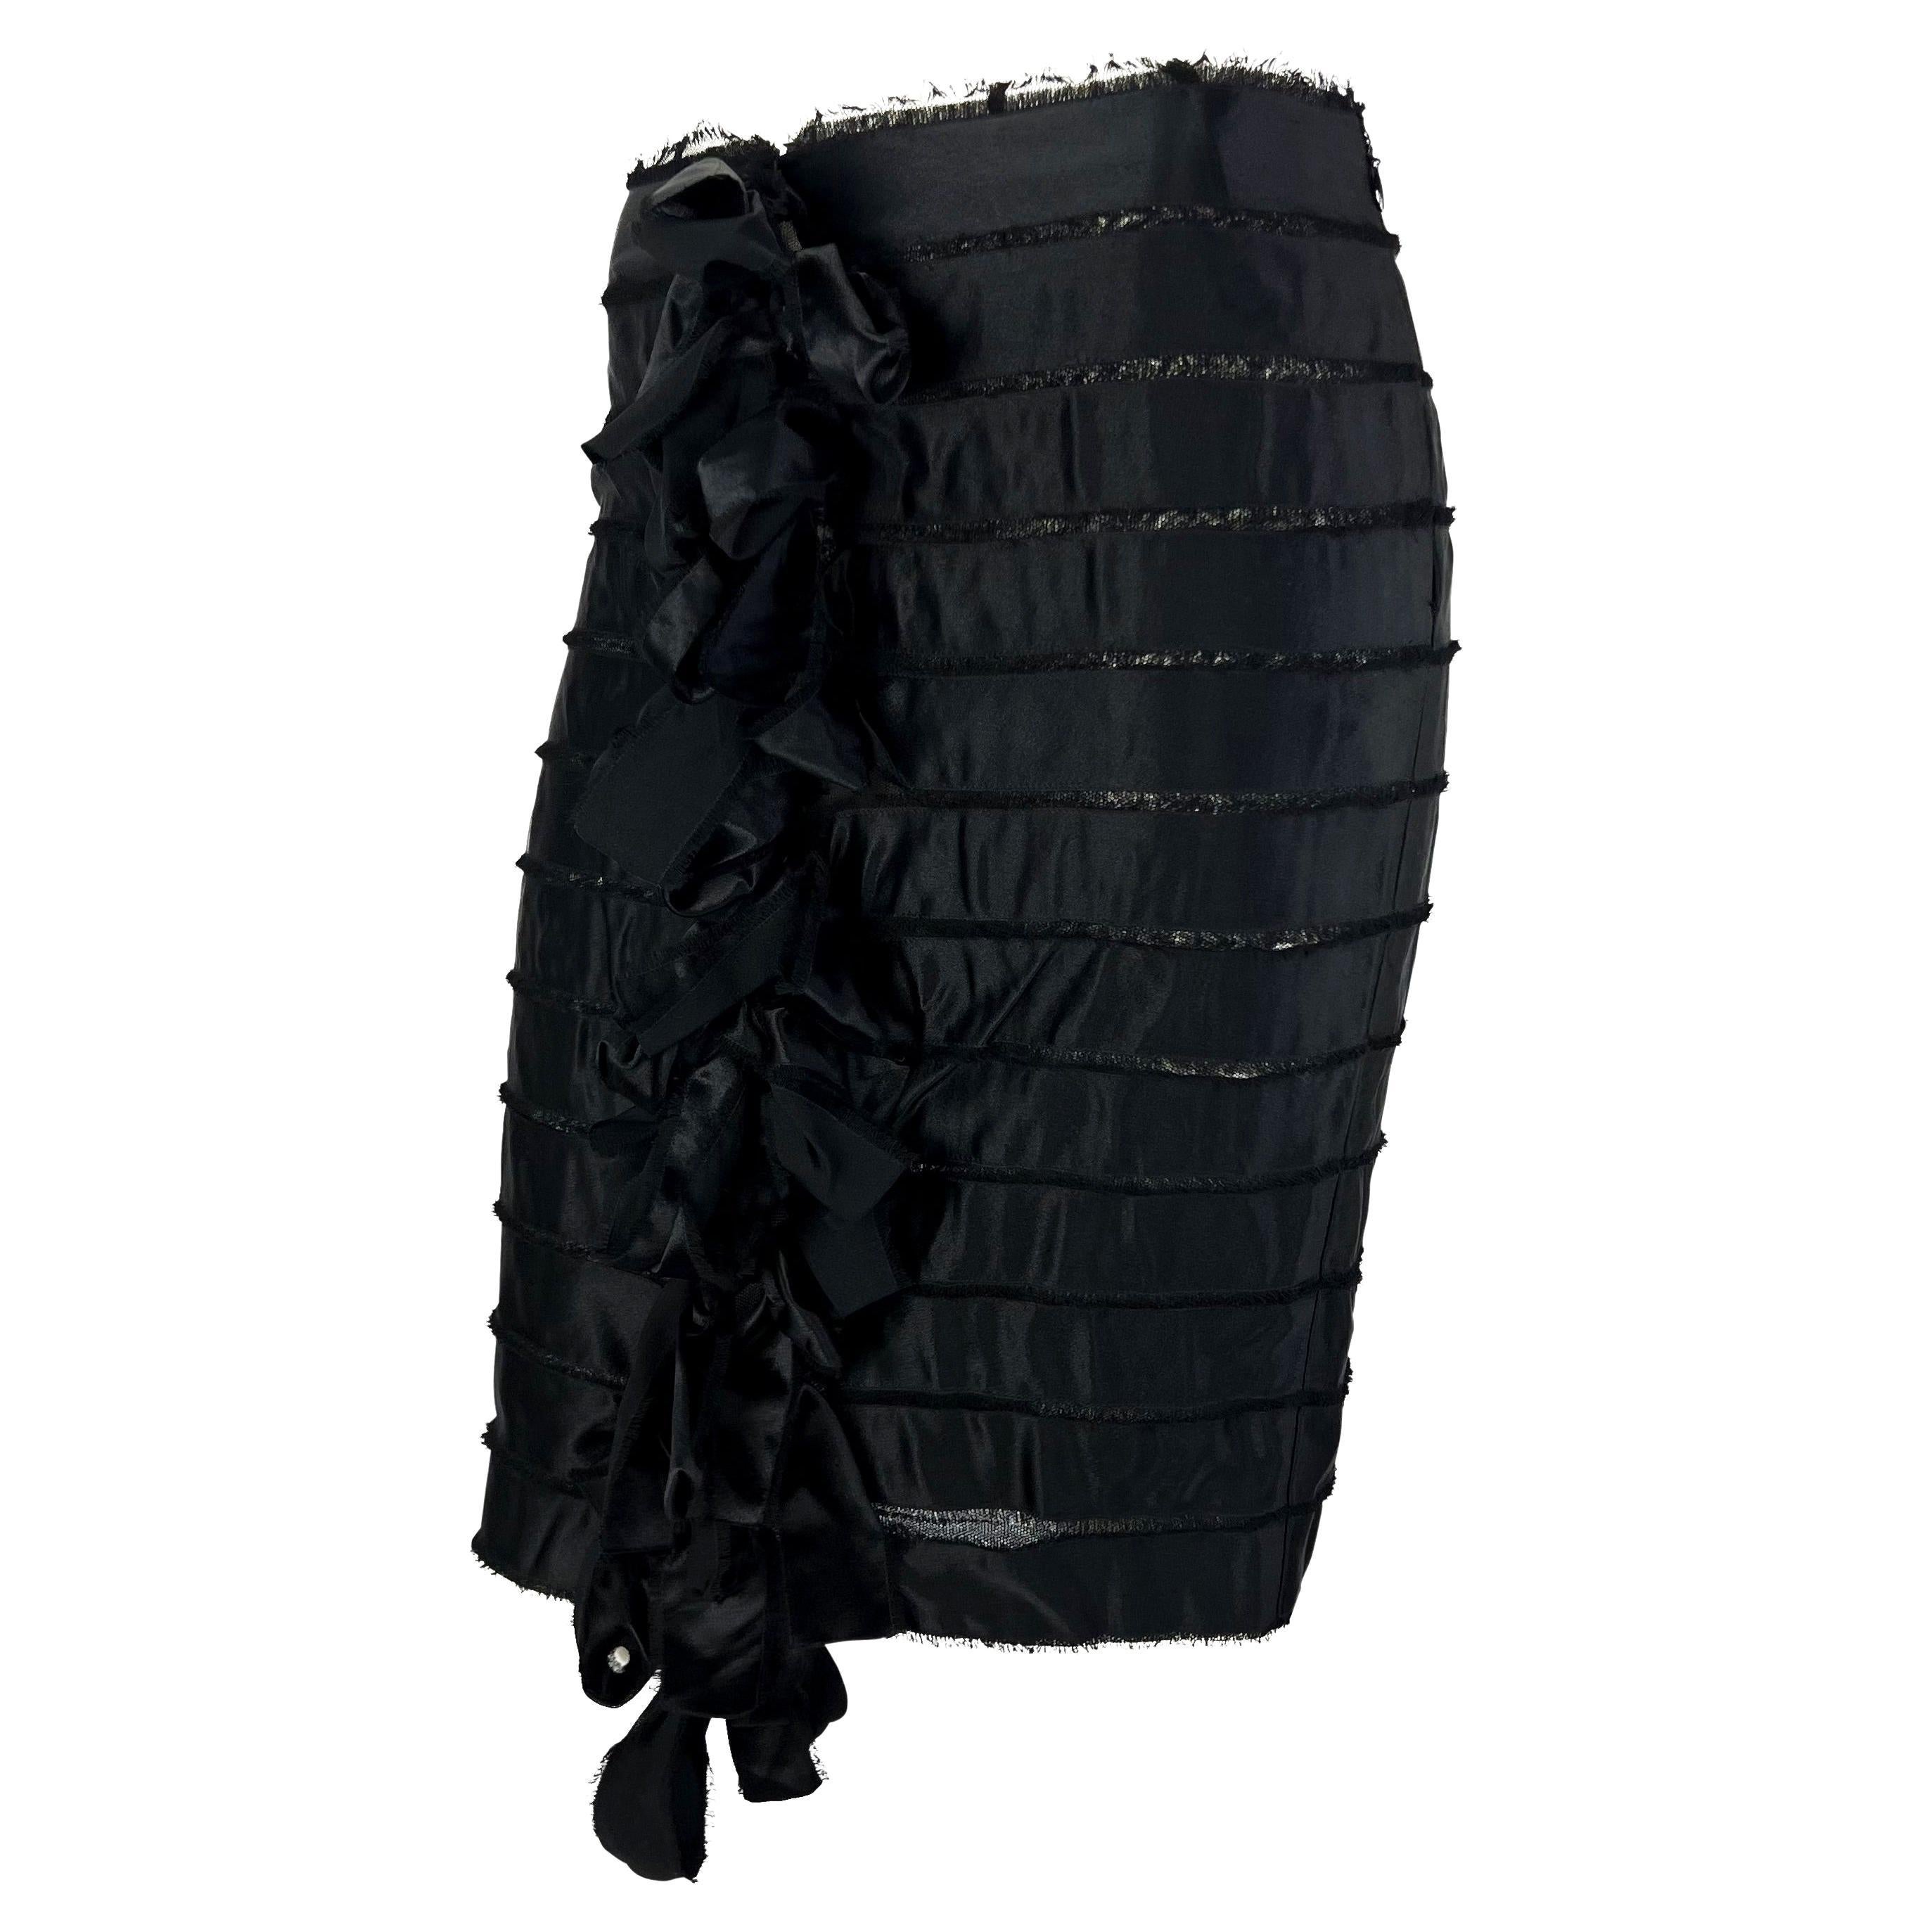 F/W 2002 Yves Saint Laurent by Tom Ford Runway Black Satin Ribbon Tulle Skirt For Sale 1